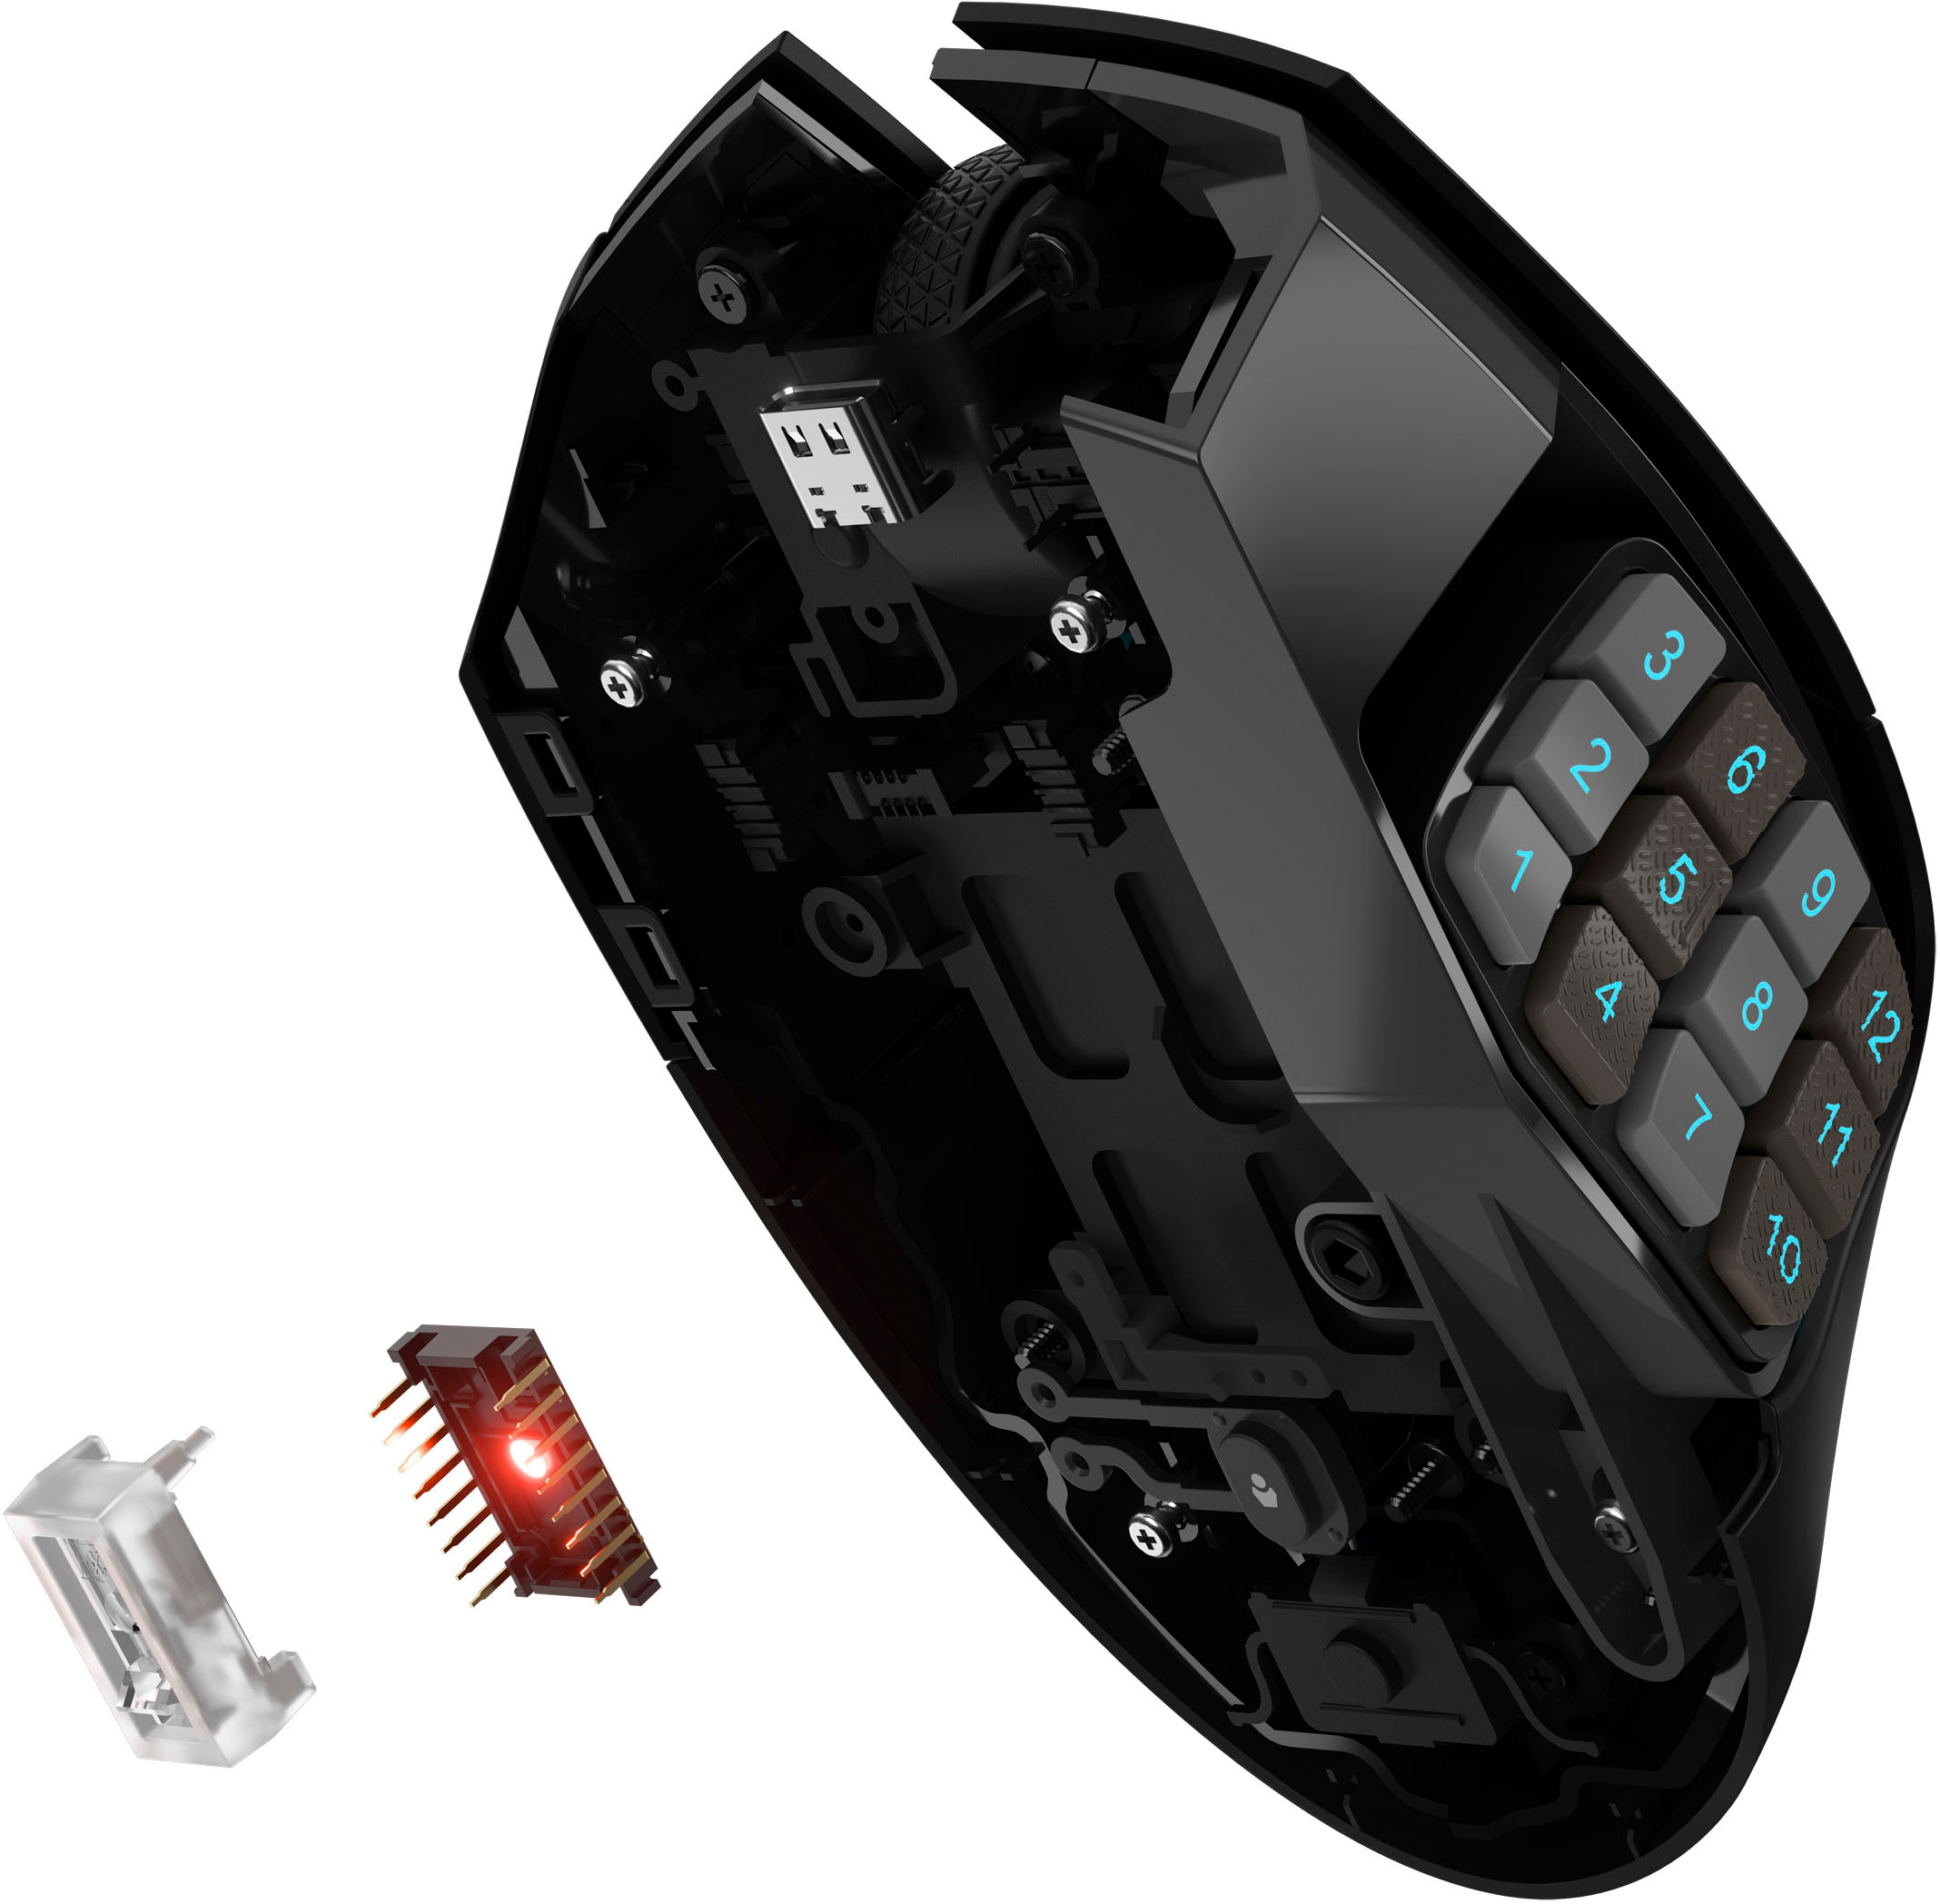 Corsair Scimitar Elite Wireless review: MMO mouse has a sliding